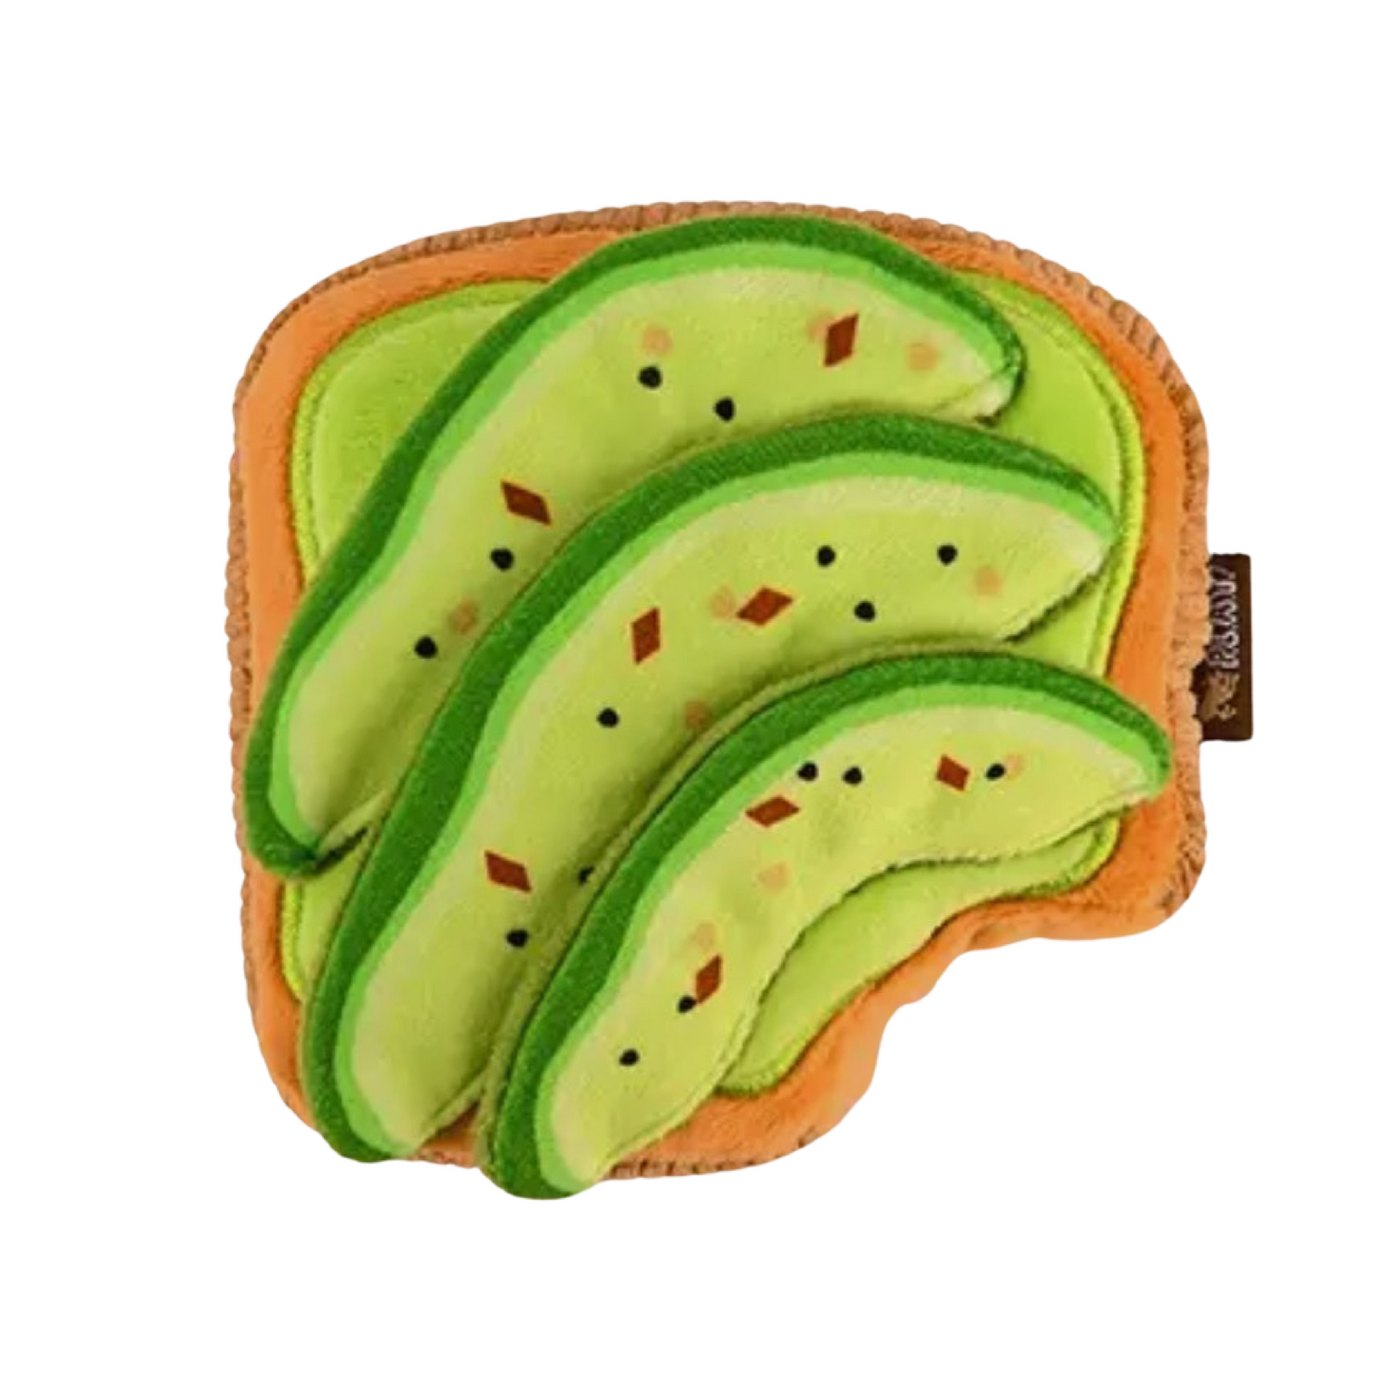 Plush avocado toast dog toy that features 3 slices of avocado.